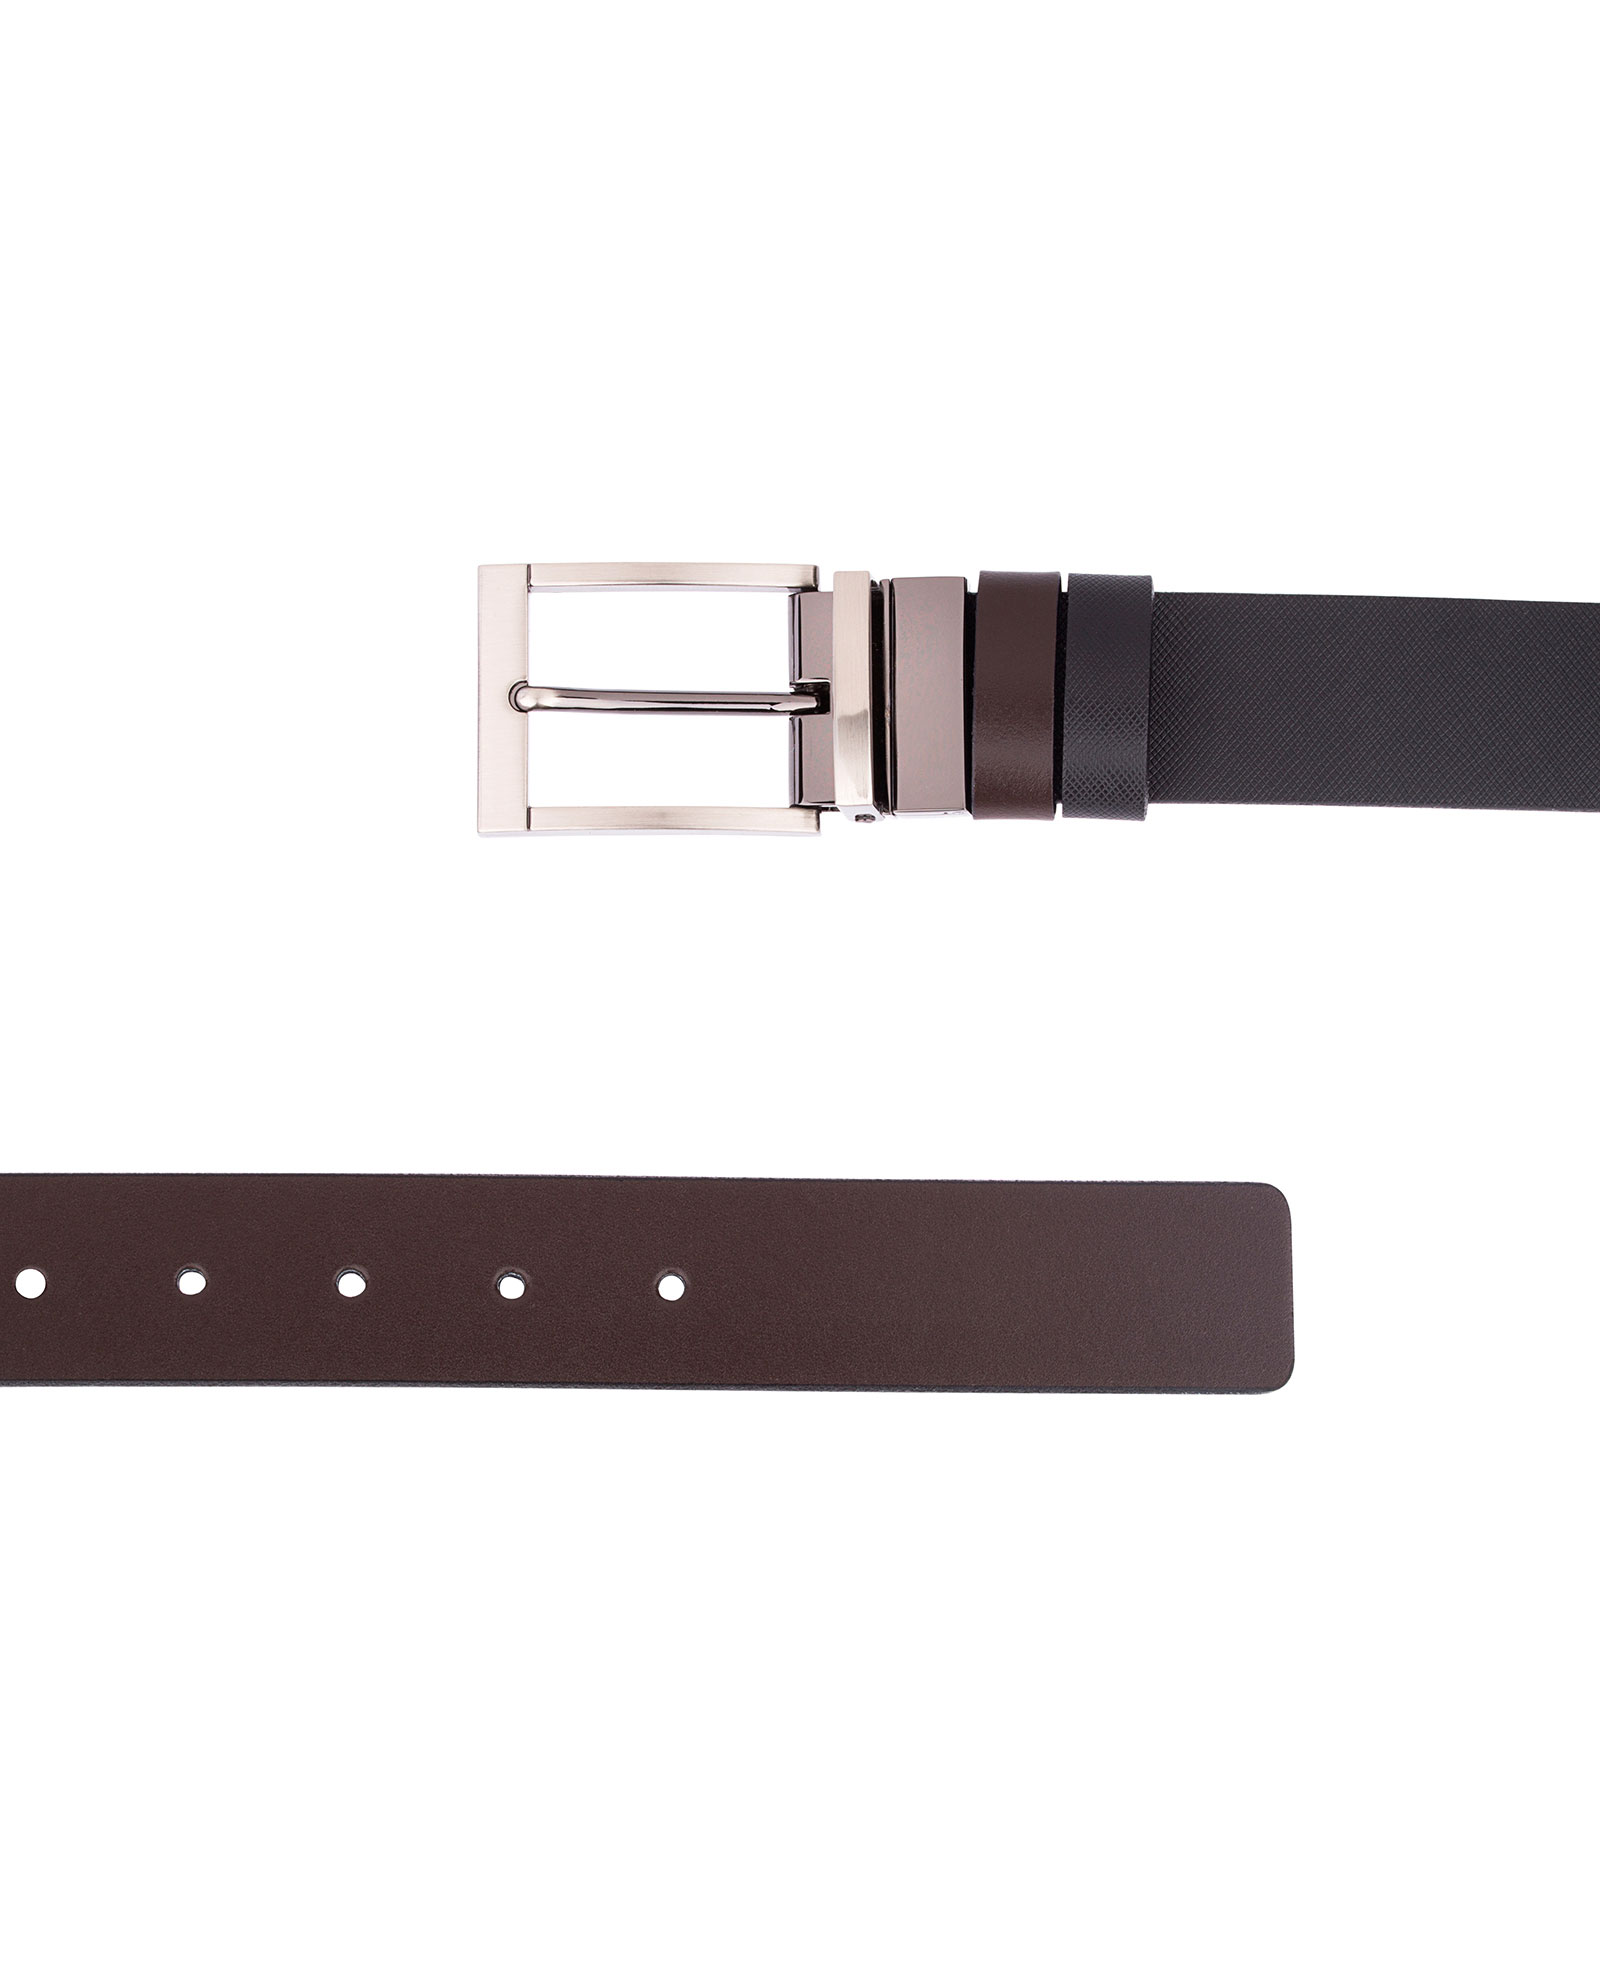 Buy Men's Saffiano Leather Belt - Black Brown Reversible - FREE SHIP!